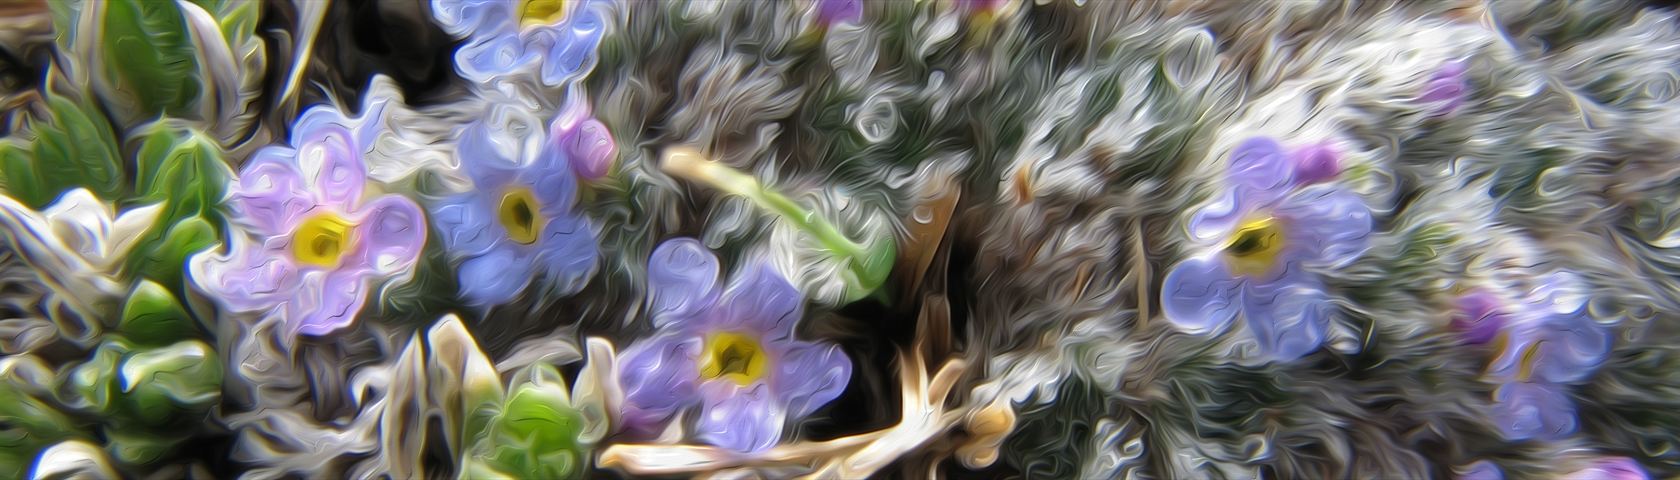 Tundra Flower (Oil)